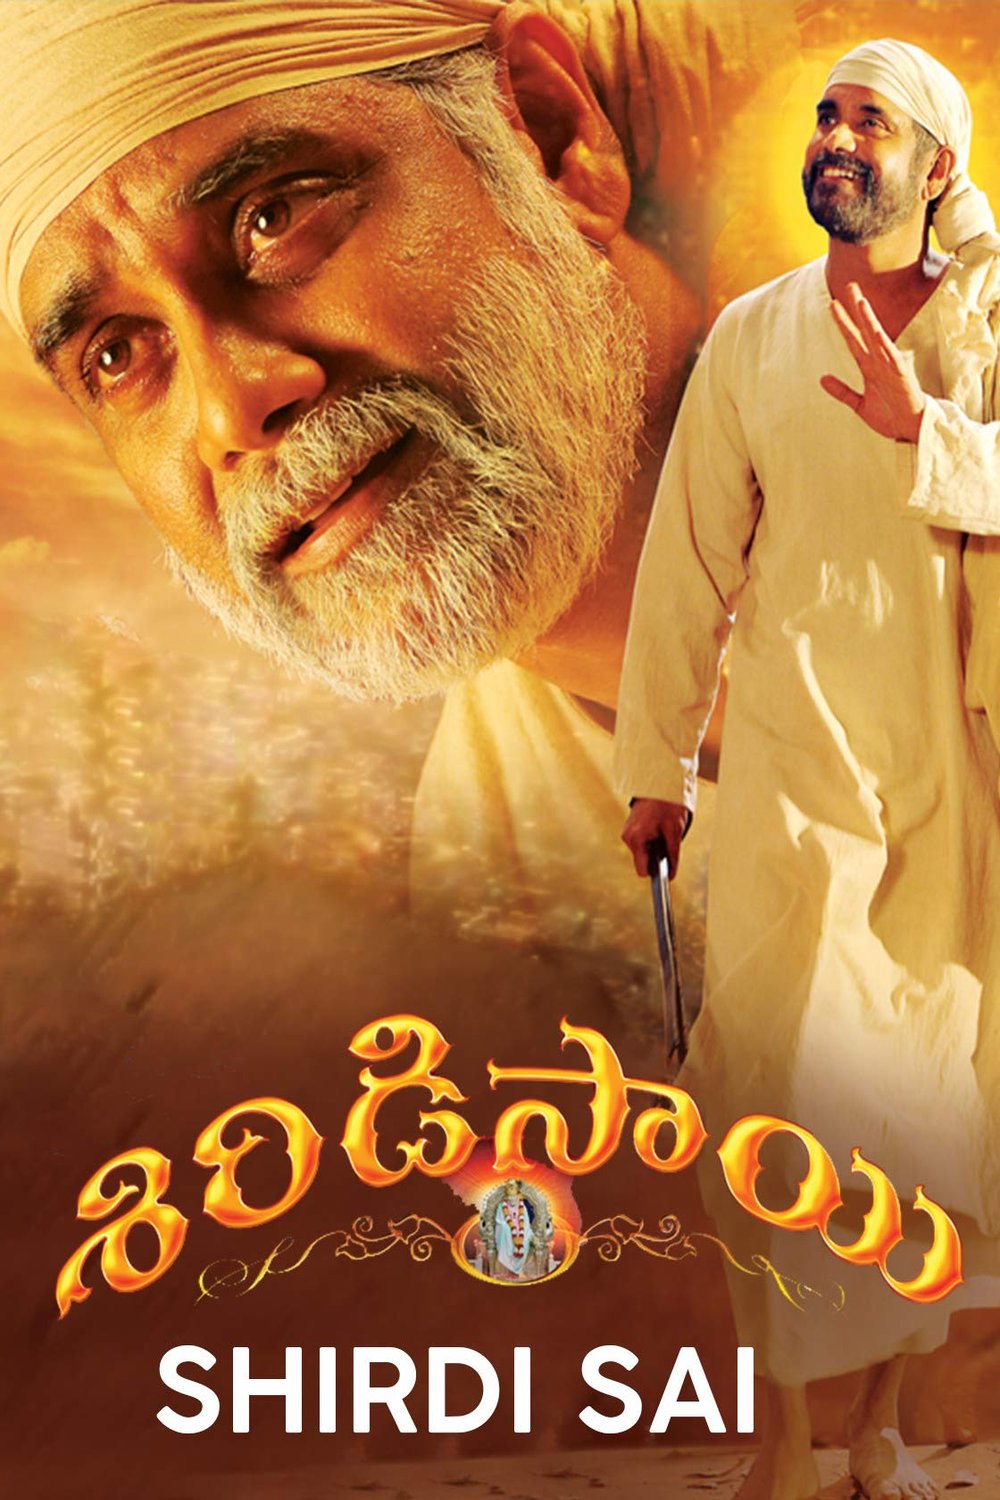 Telugu poster of the movie Shirdi Sai